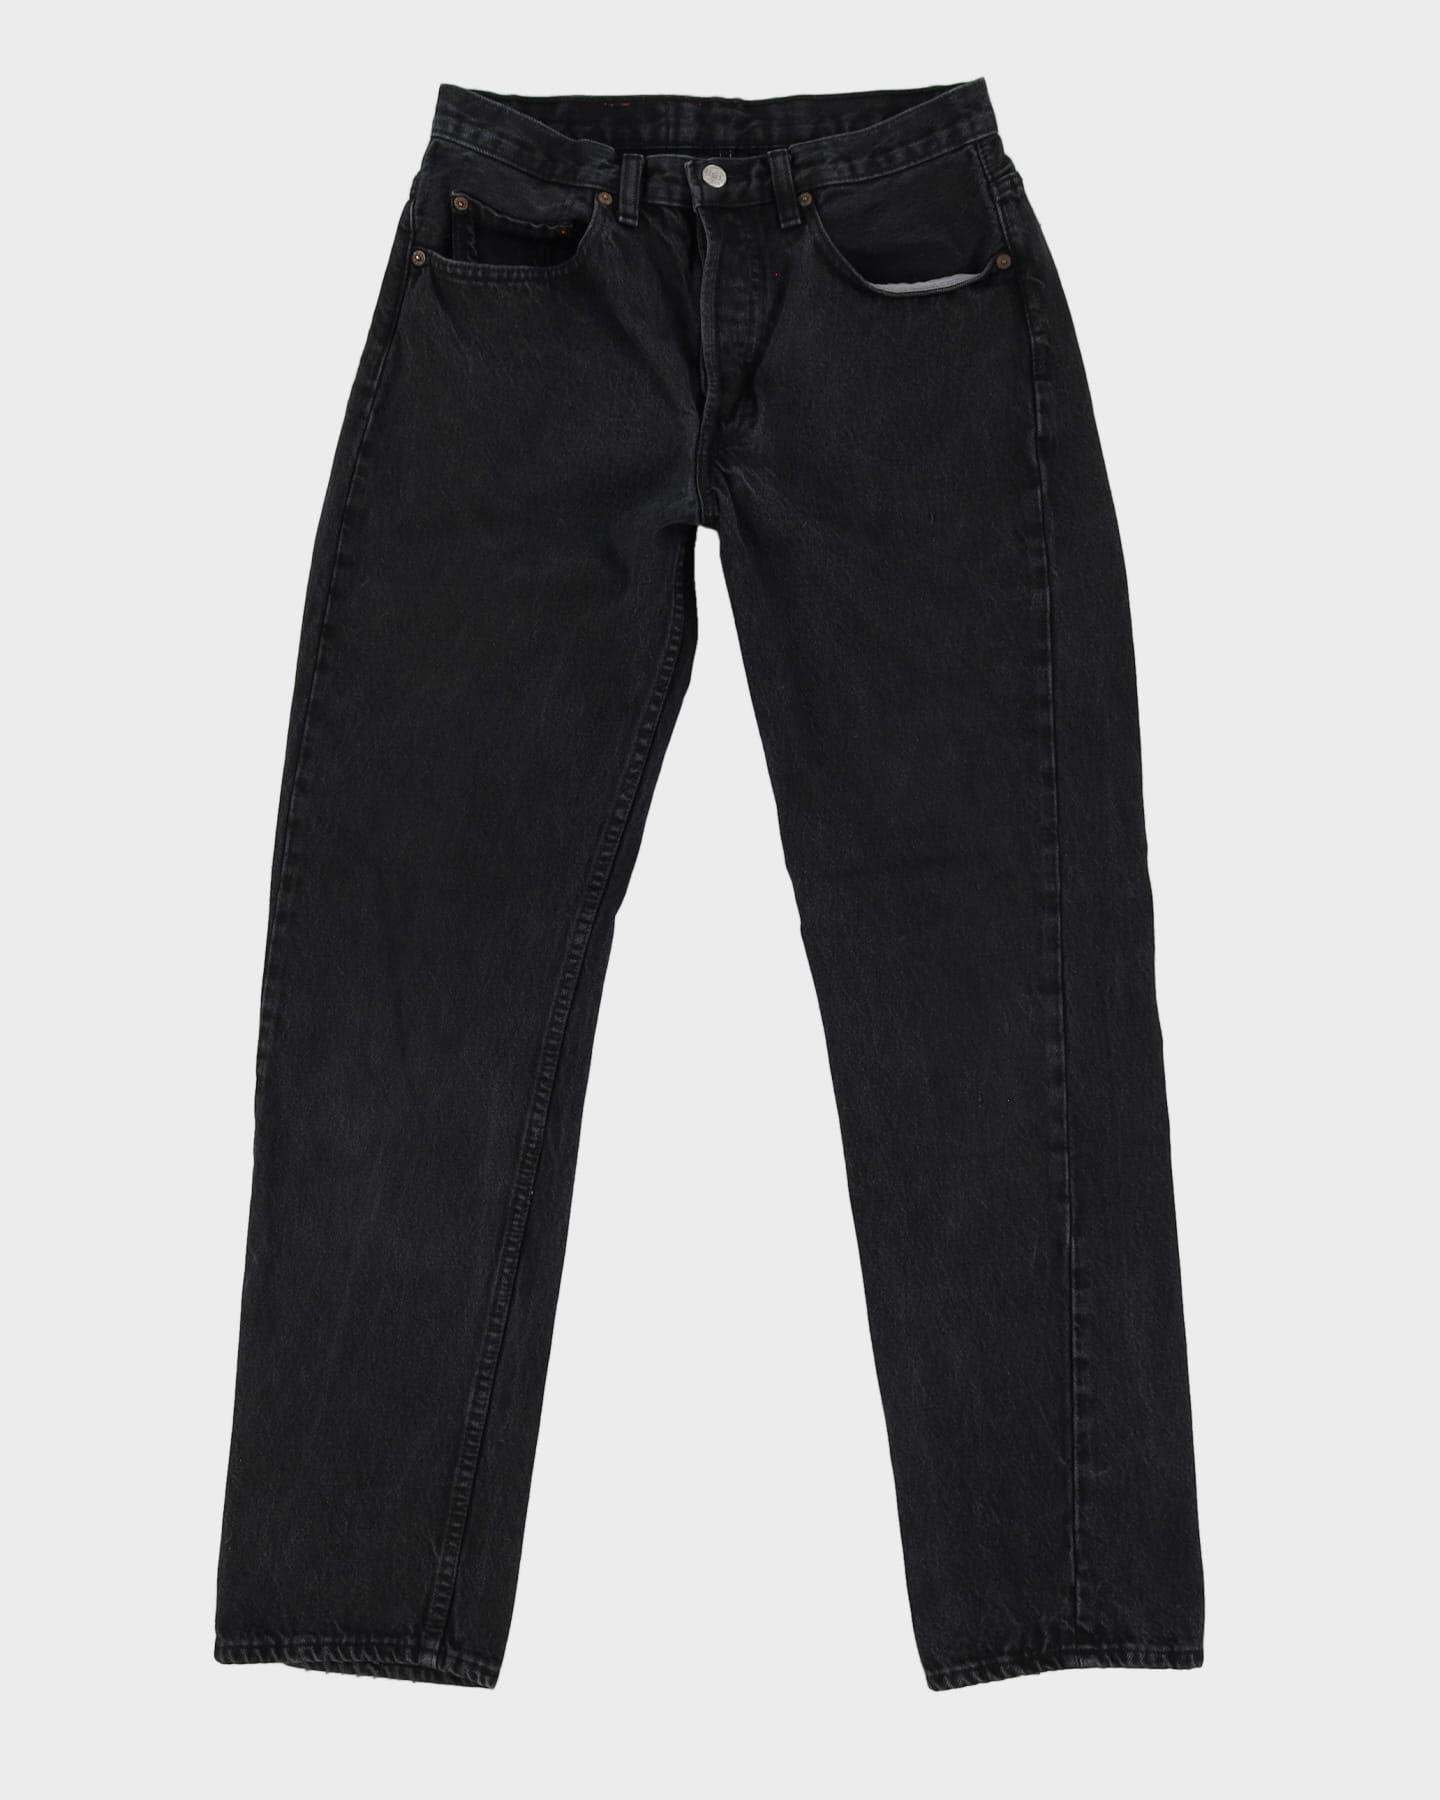 Vintage 90s Levi's 501 Dark Wash Black Jeans - W30 L32